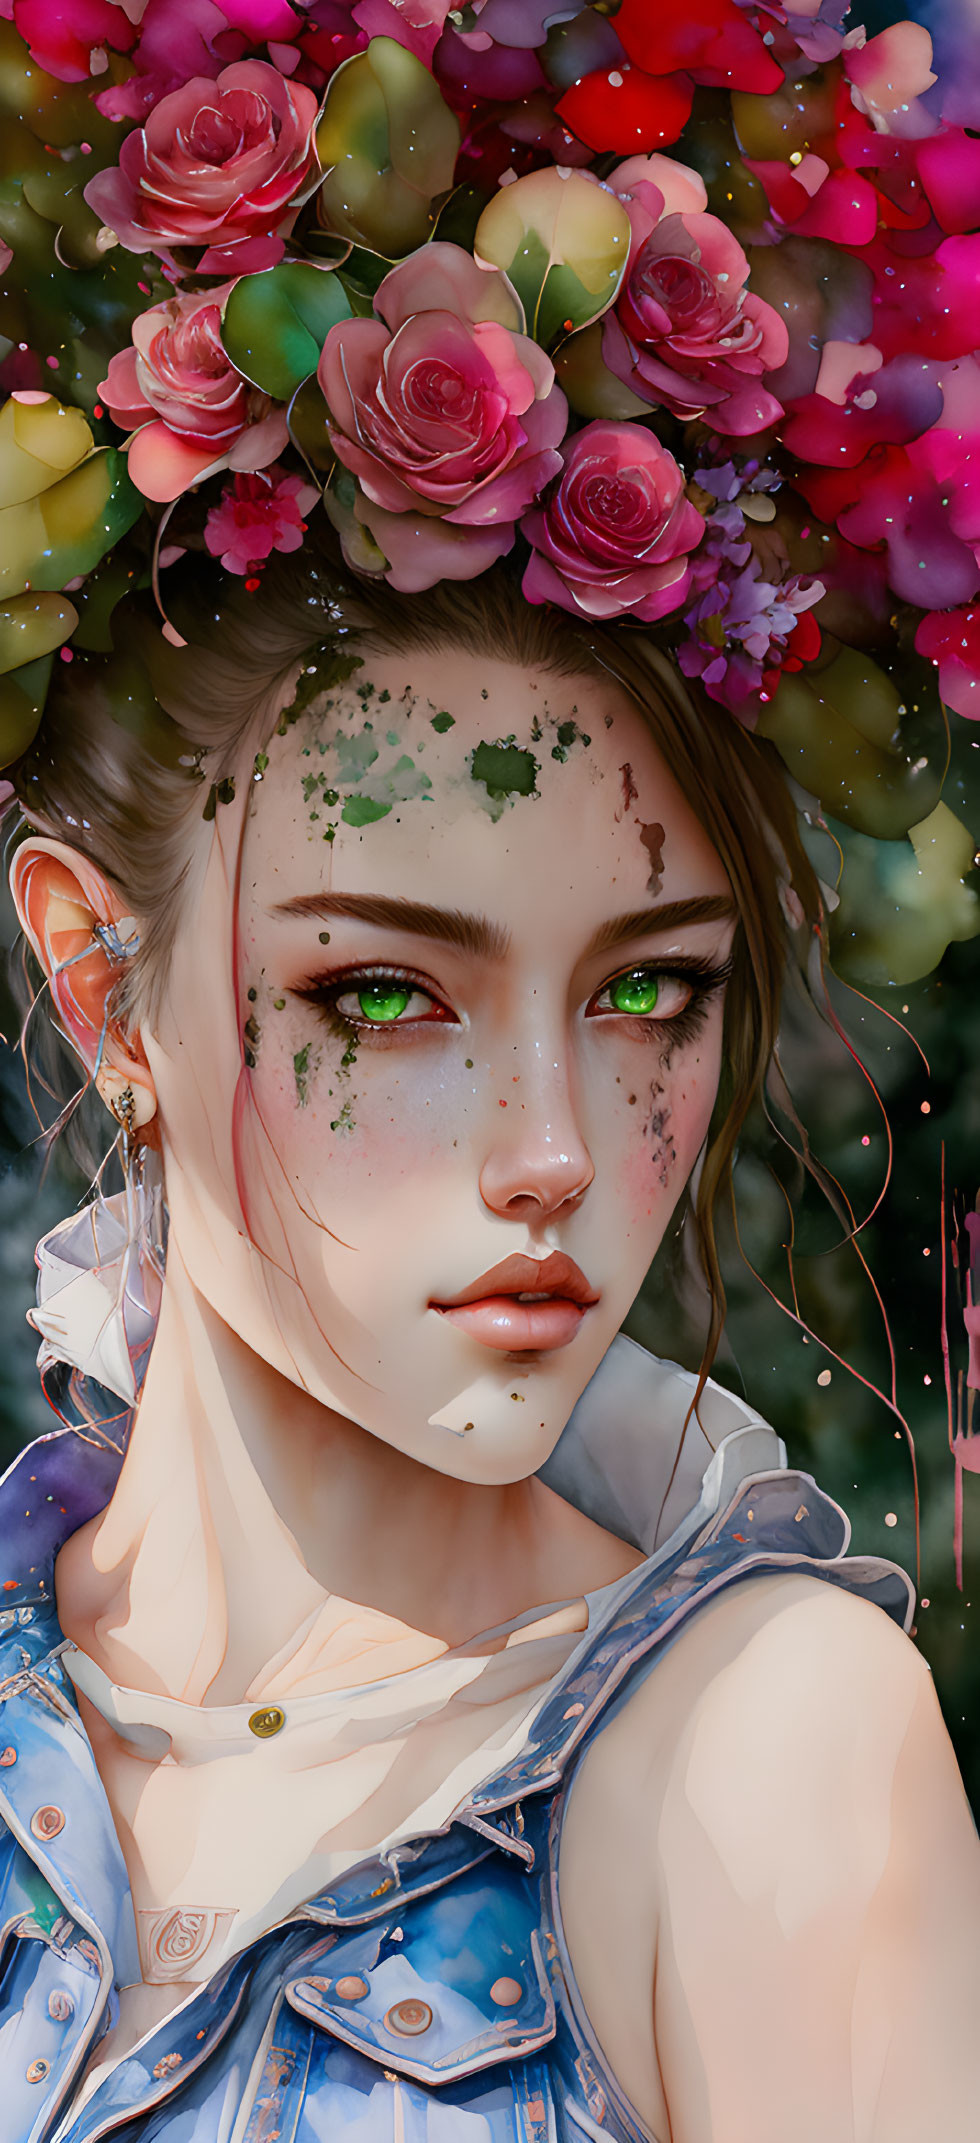 Digital artwork: Woman with floral crown, freckles, green eyes, denim jacket, vibrant flowers